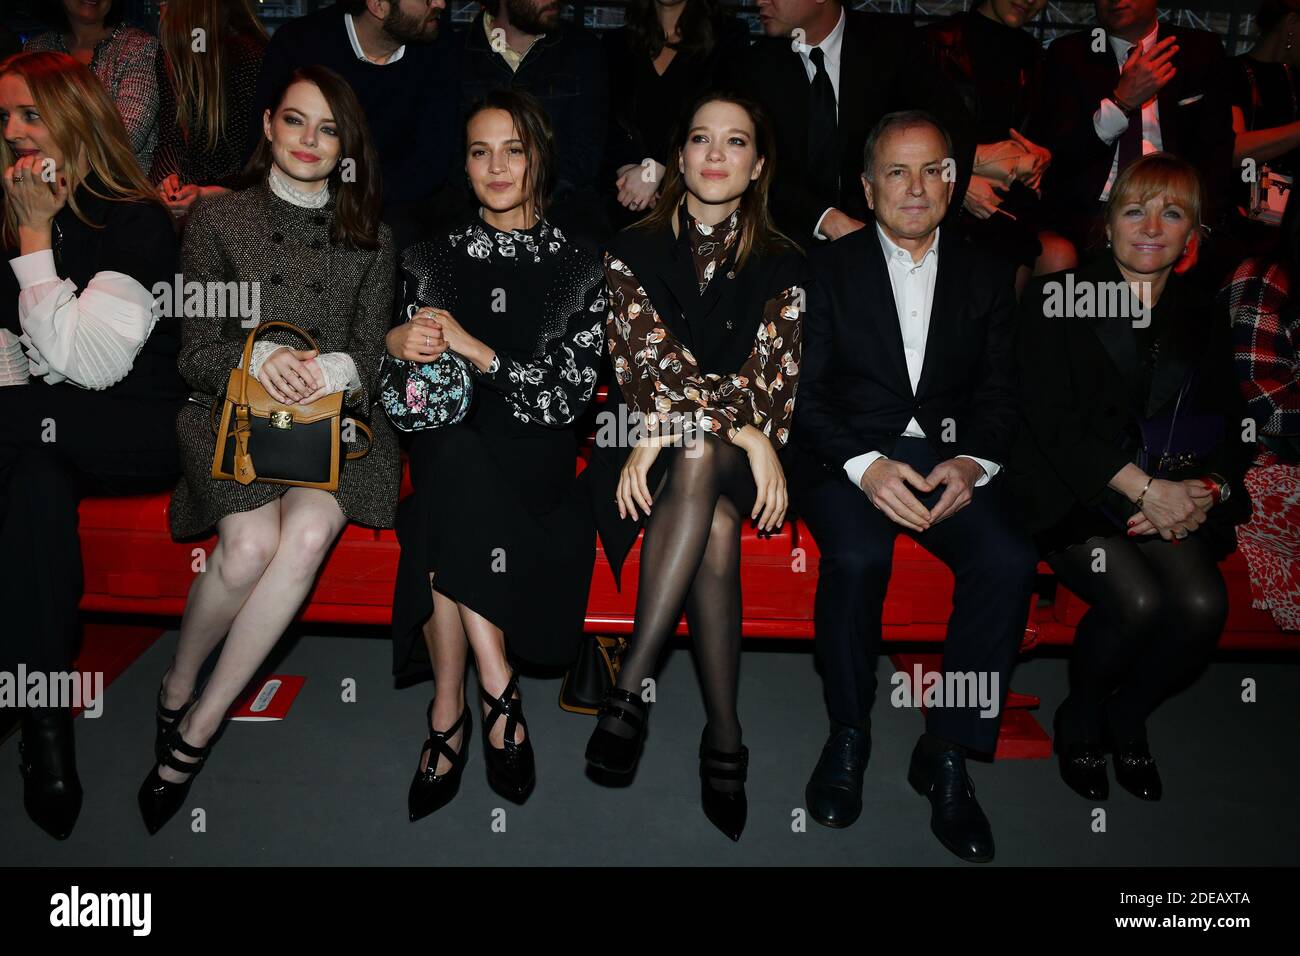 Inside Louis Vuitton Dinner With Lea Seydoux, Alicia Vikander – WWD